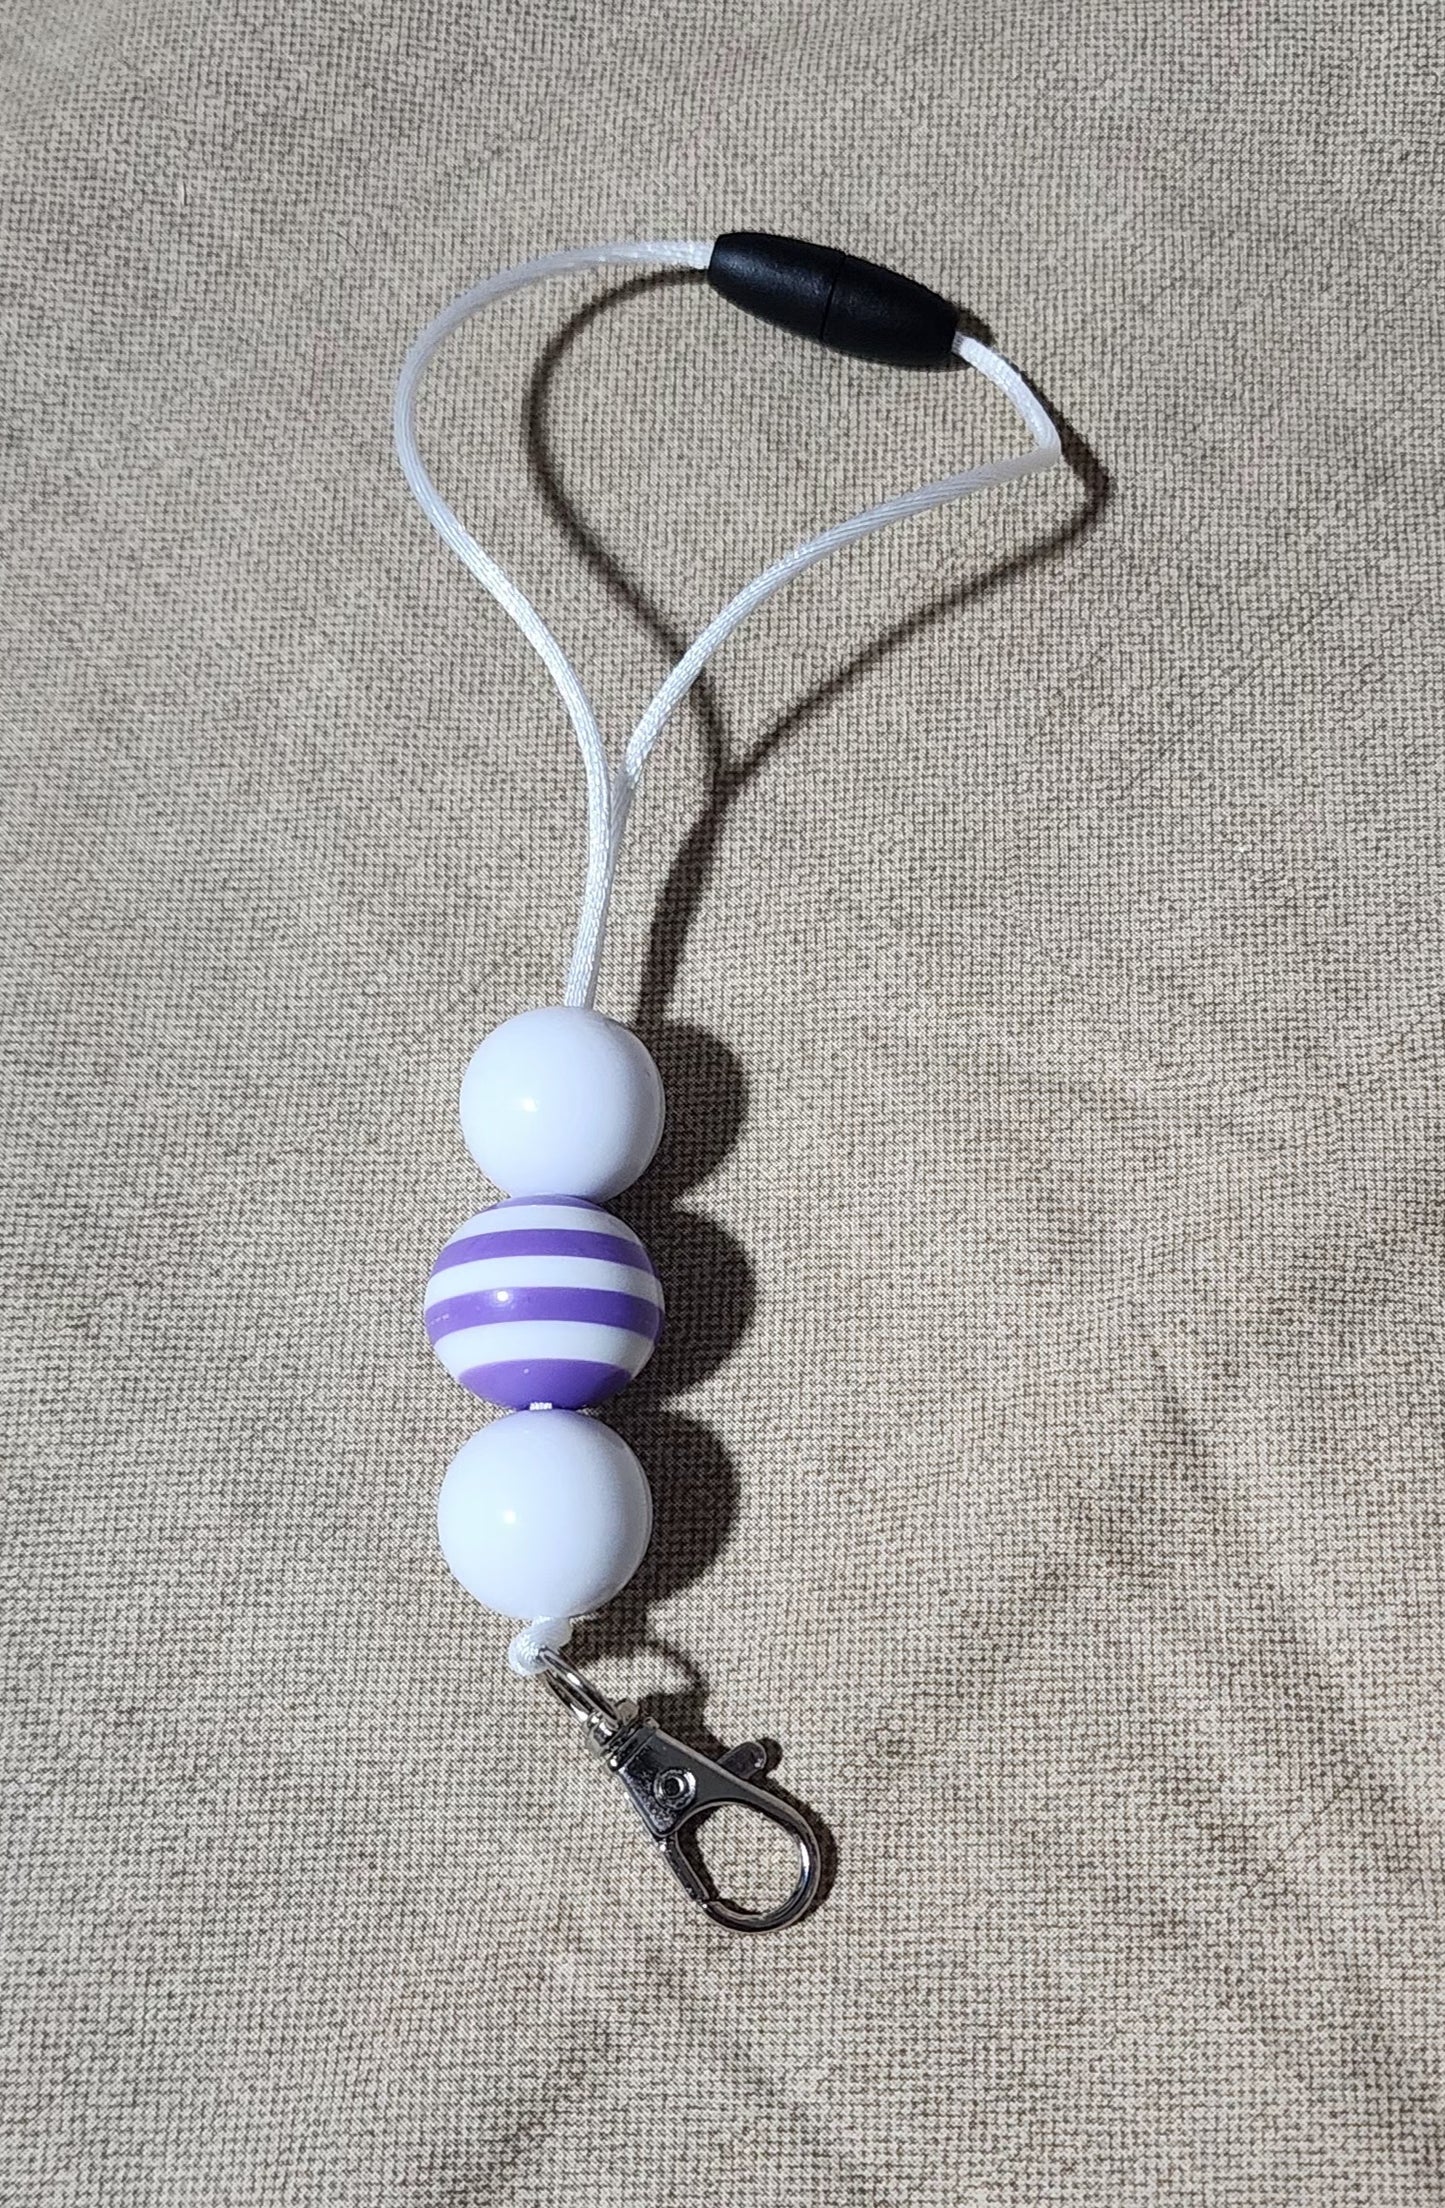 Freshie Hanger 3 bead